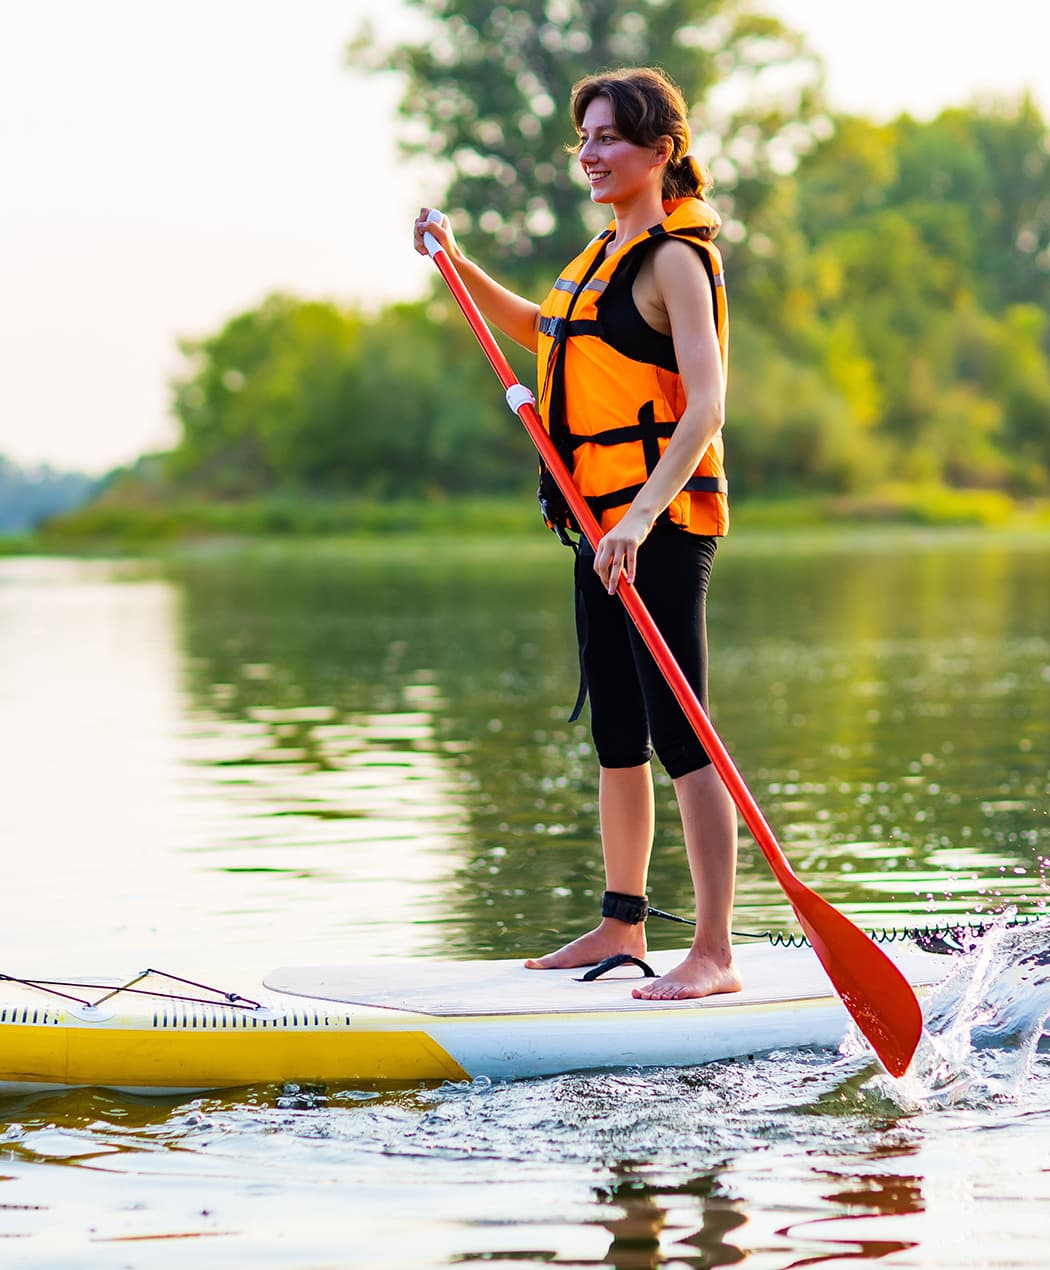 woman smiles paddling board on lake